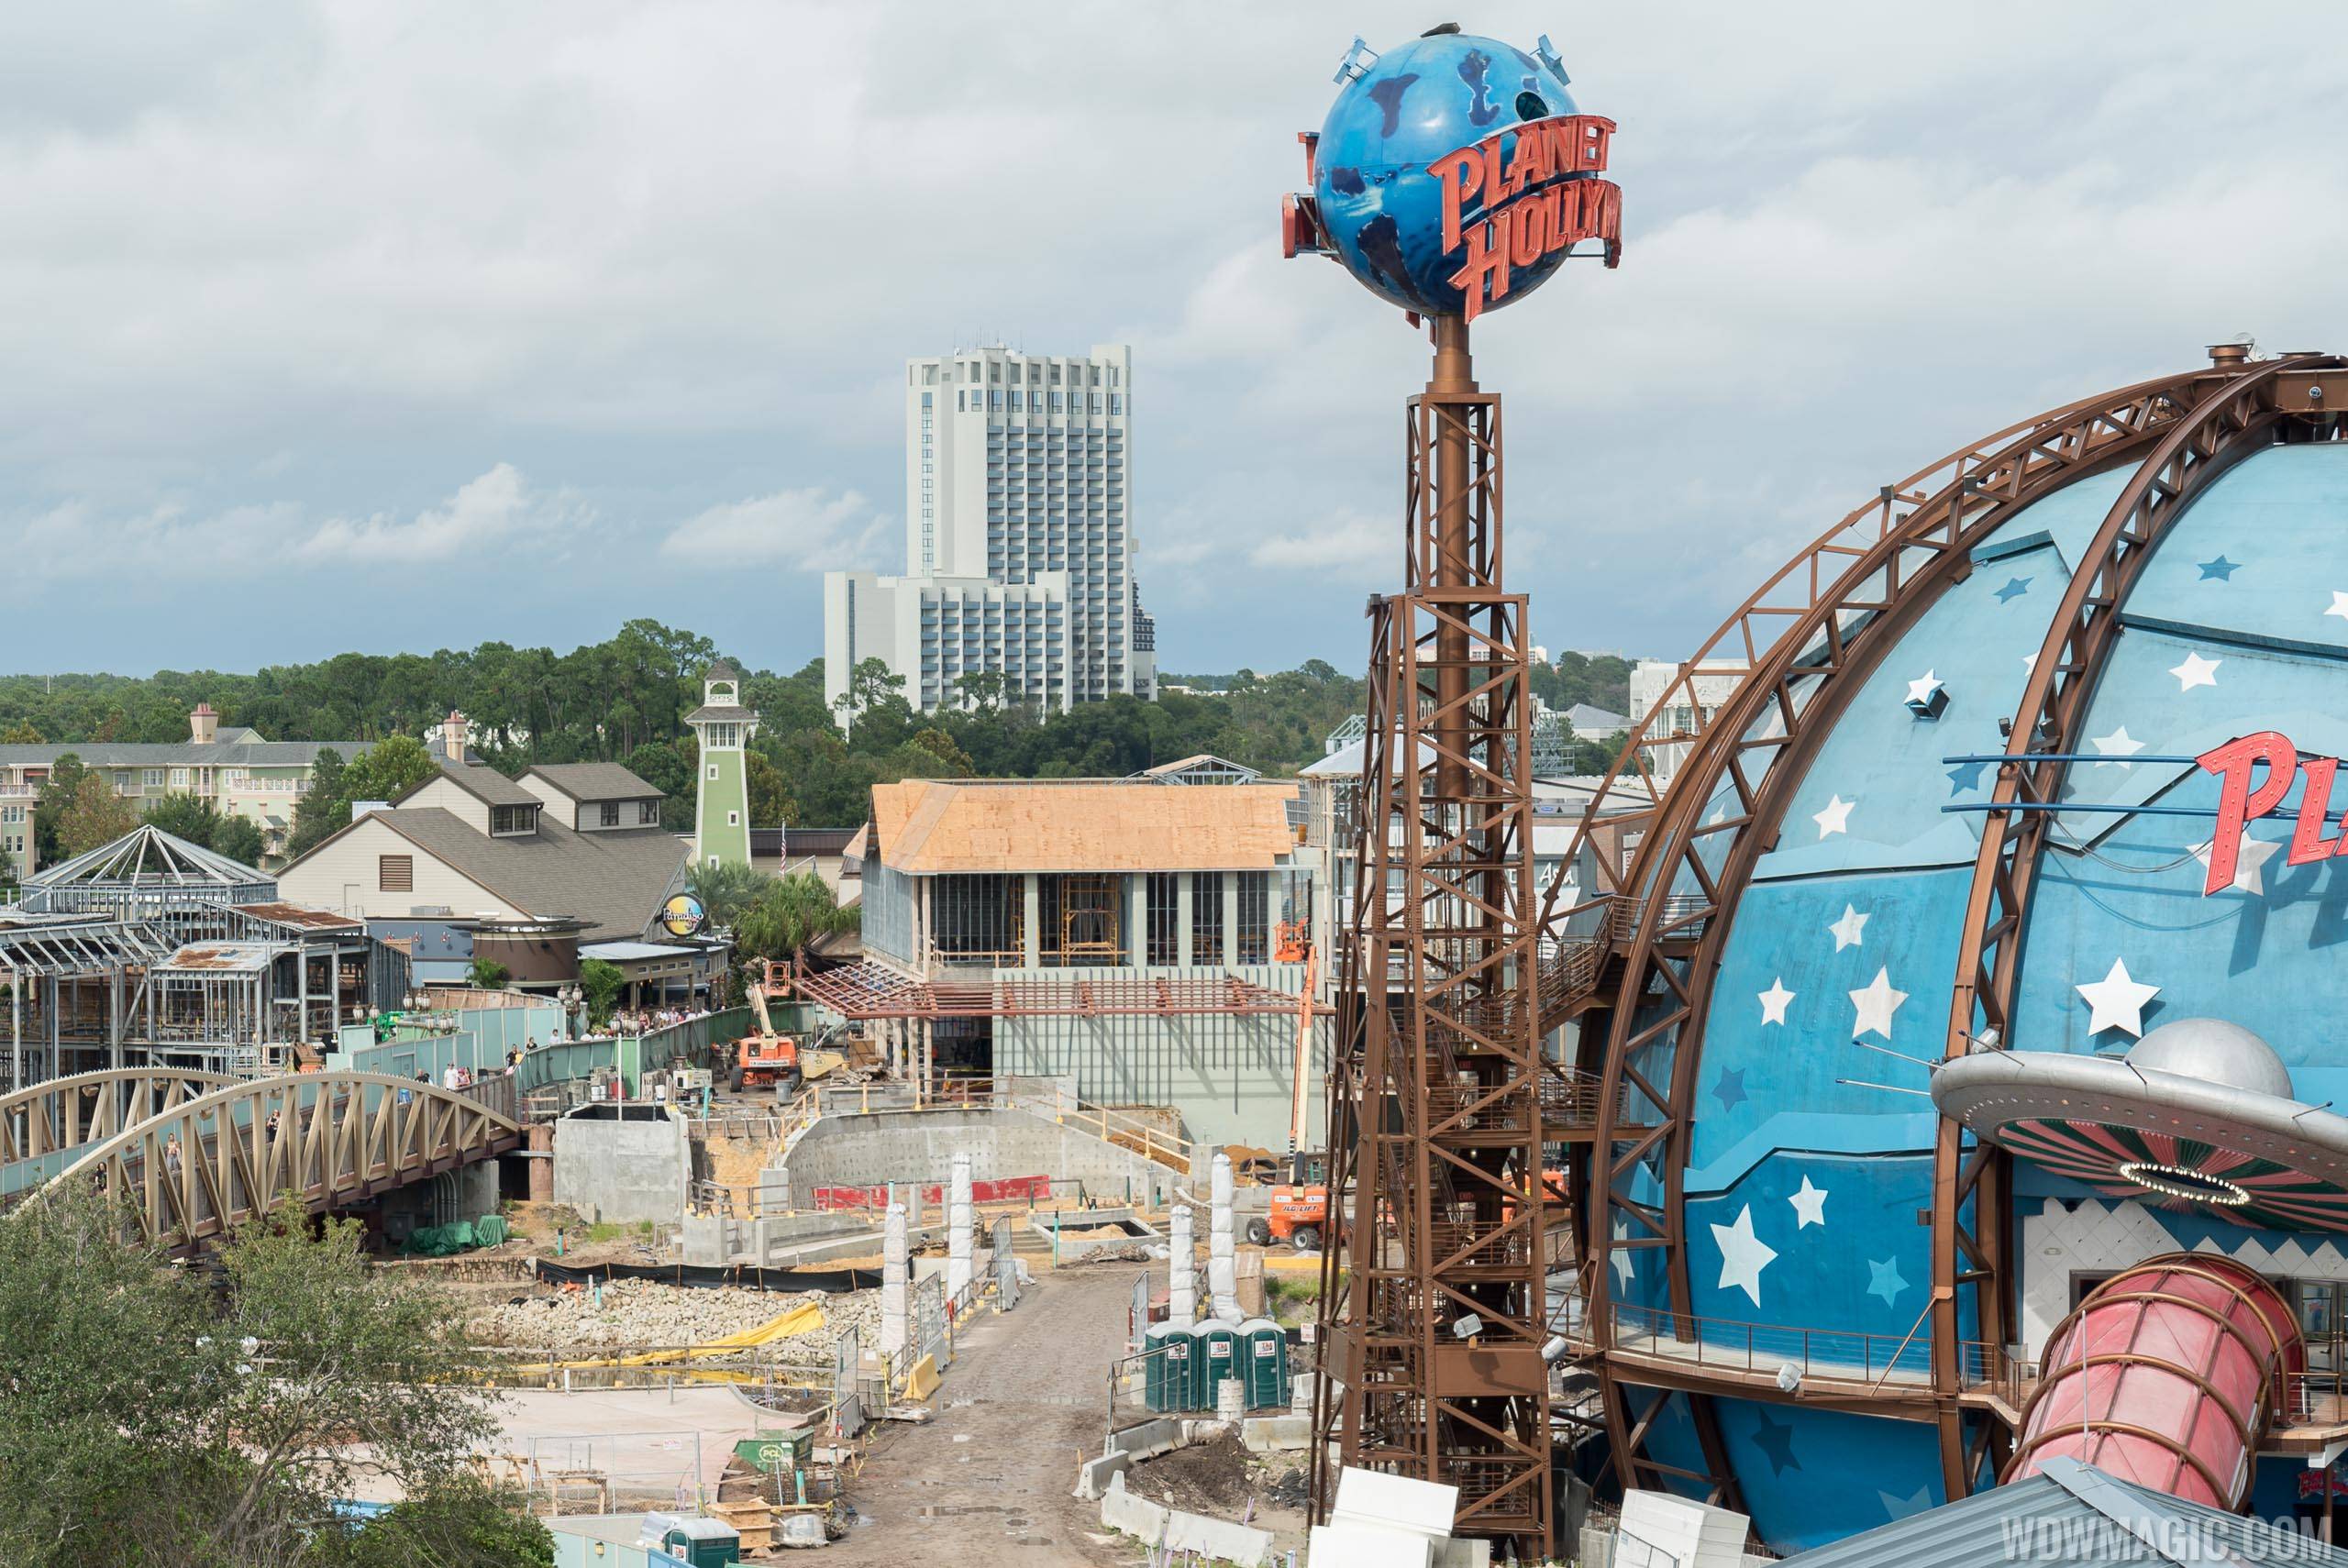 PHOTOS - STK Orlando construction update